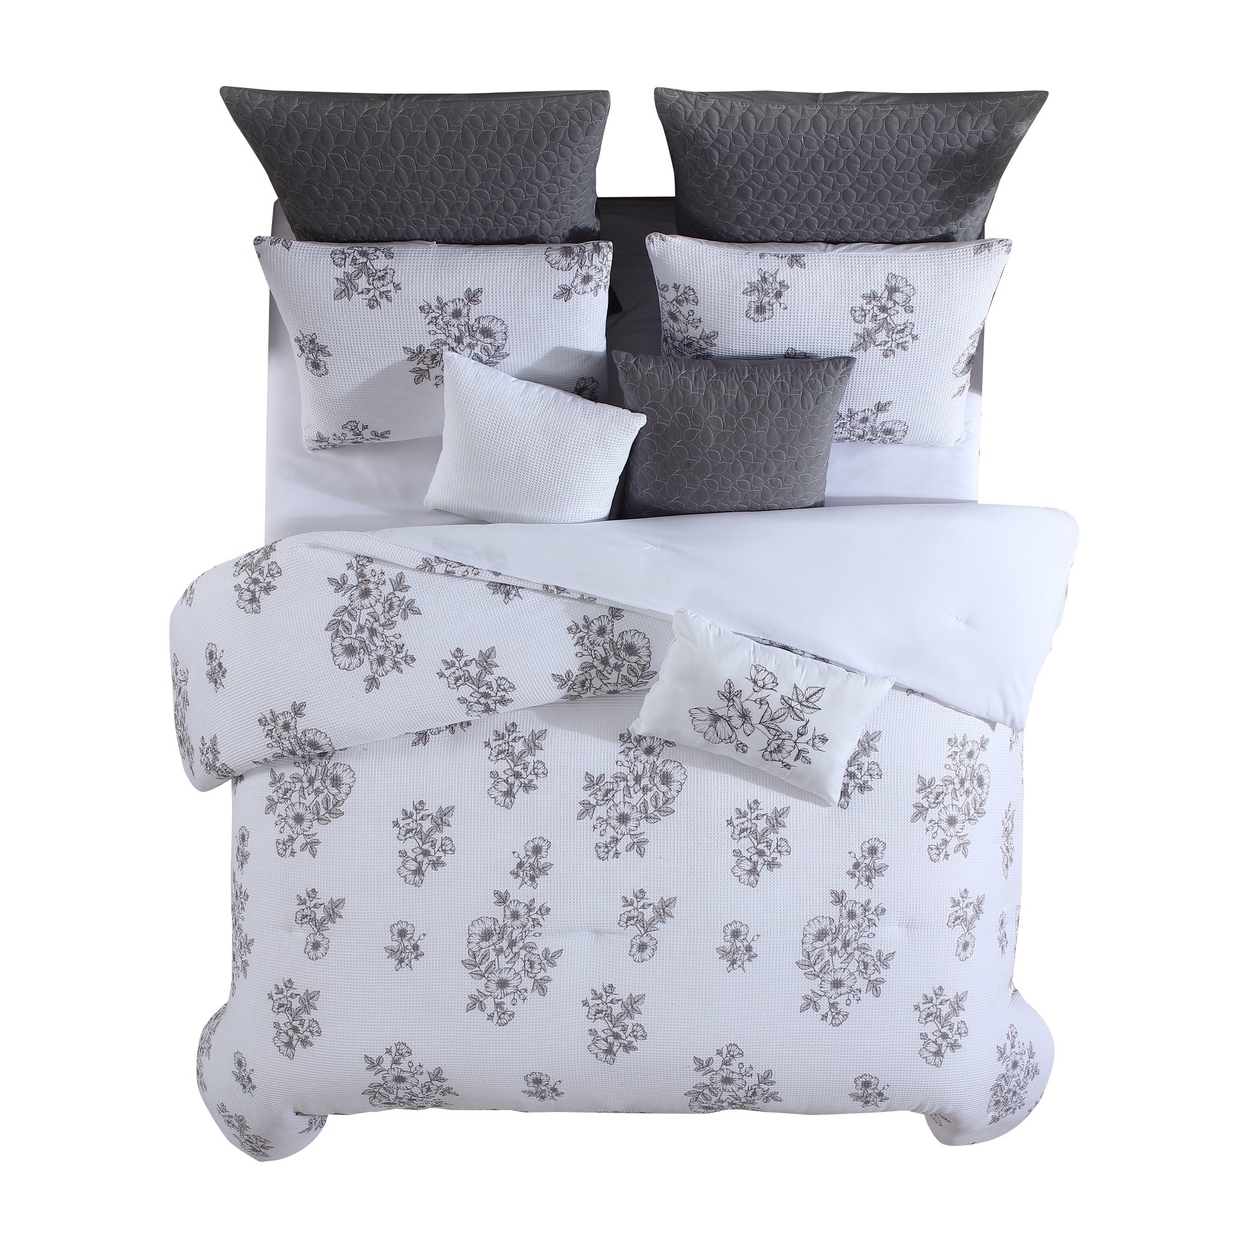 Kuri 8pc Microfiber King Comforter Set, White Gray Floral By The Urban Port- Saltoro Sherpi